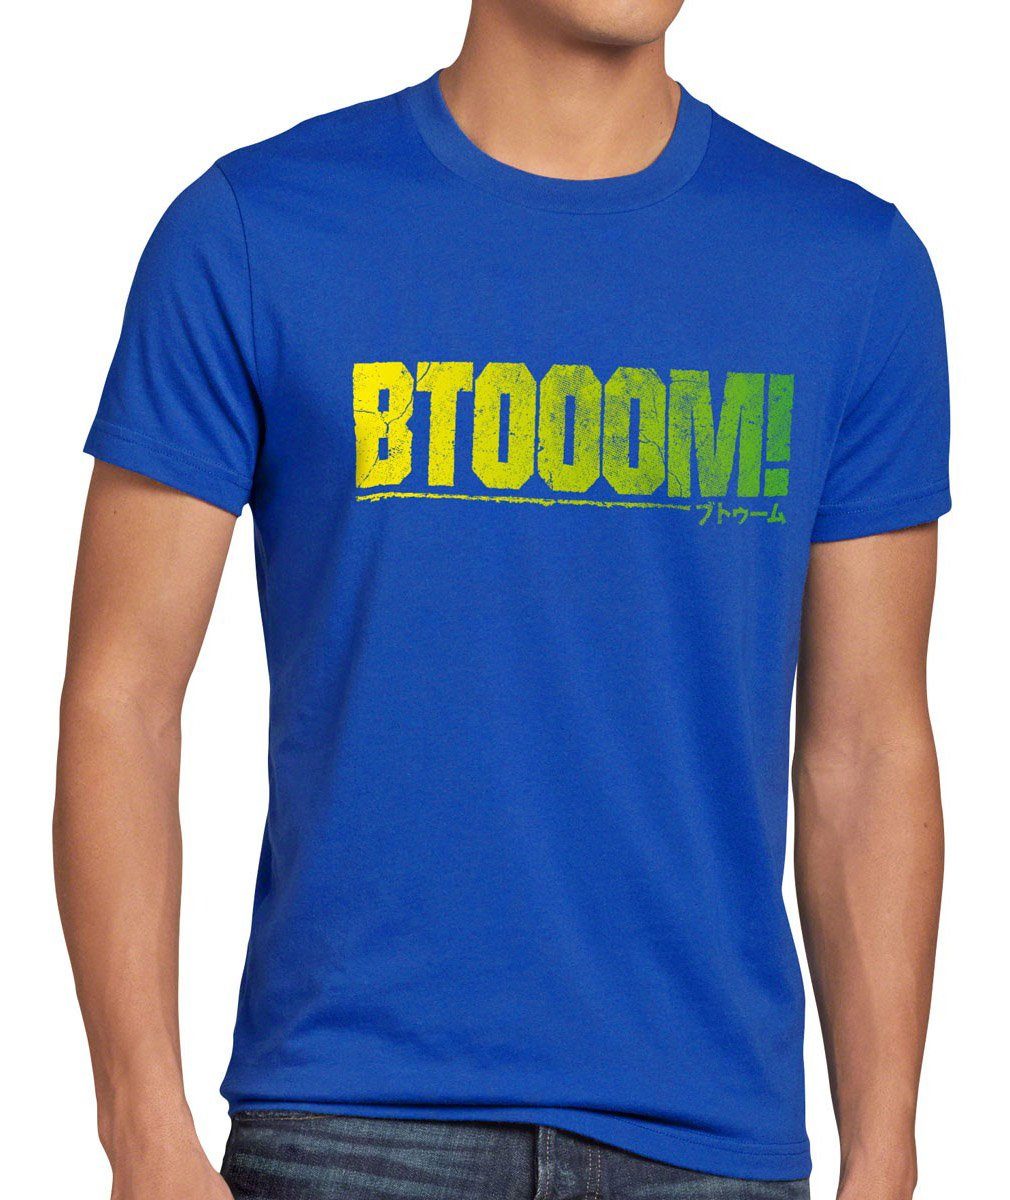 bomben T-Shirt spiel game Print-Shirt Herren anime blau explosion BTOOOM! style3 swort manga art insel